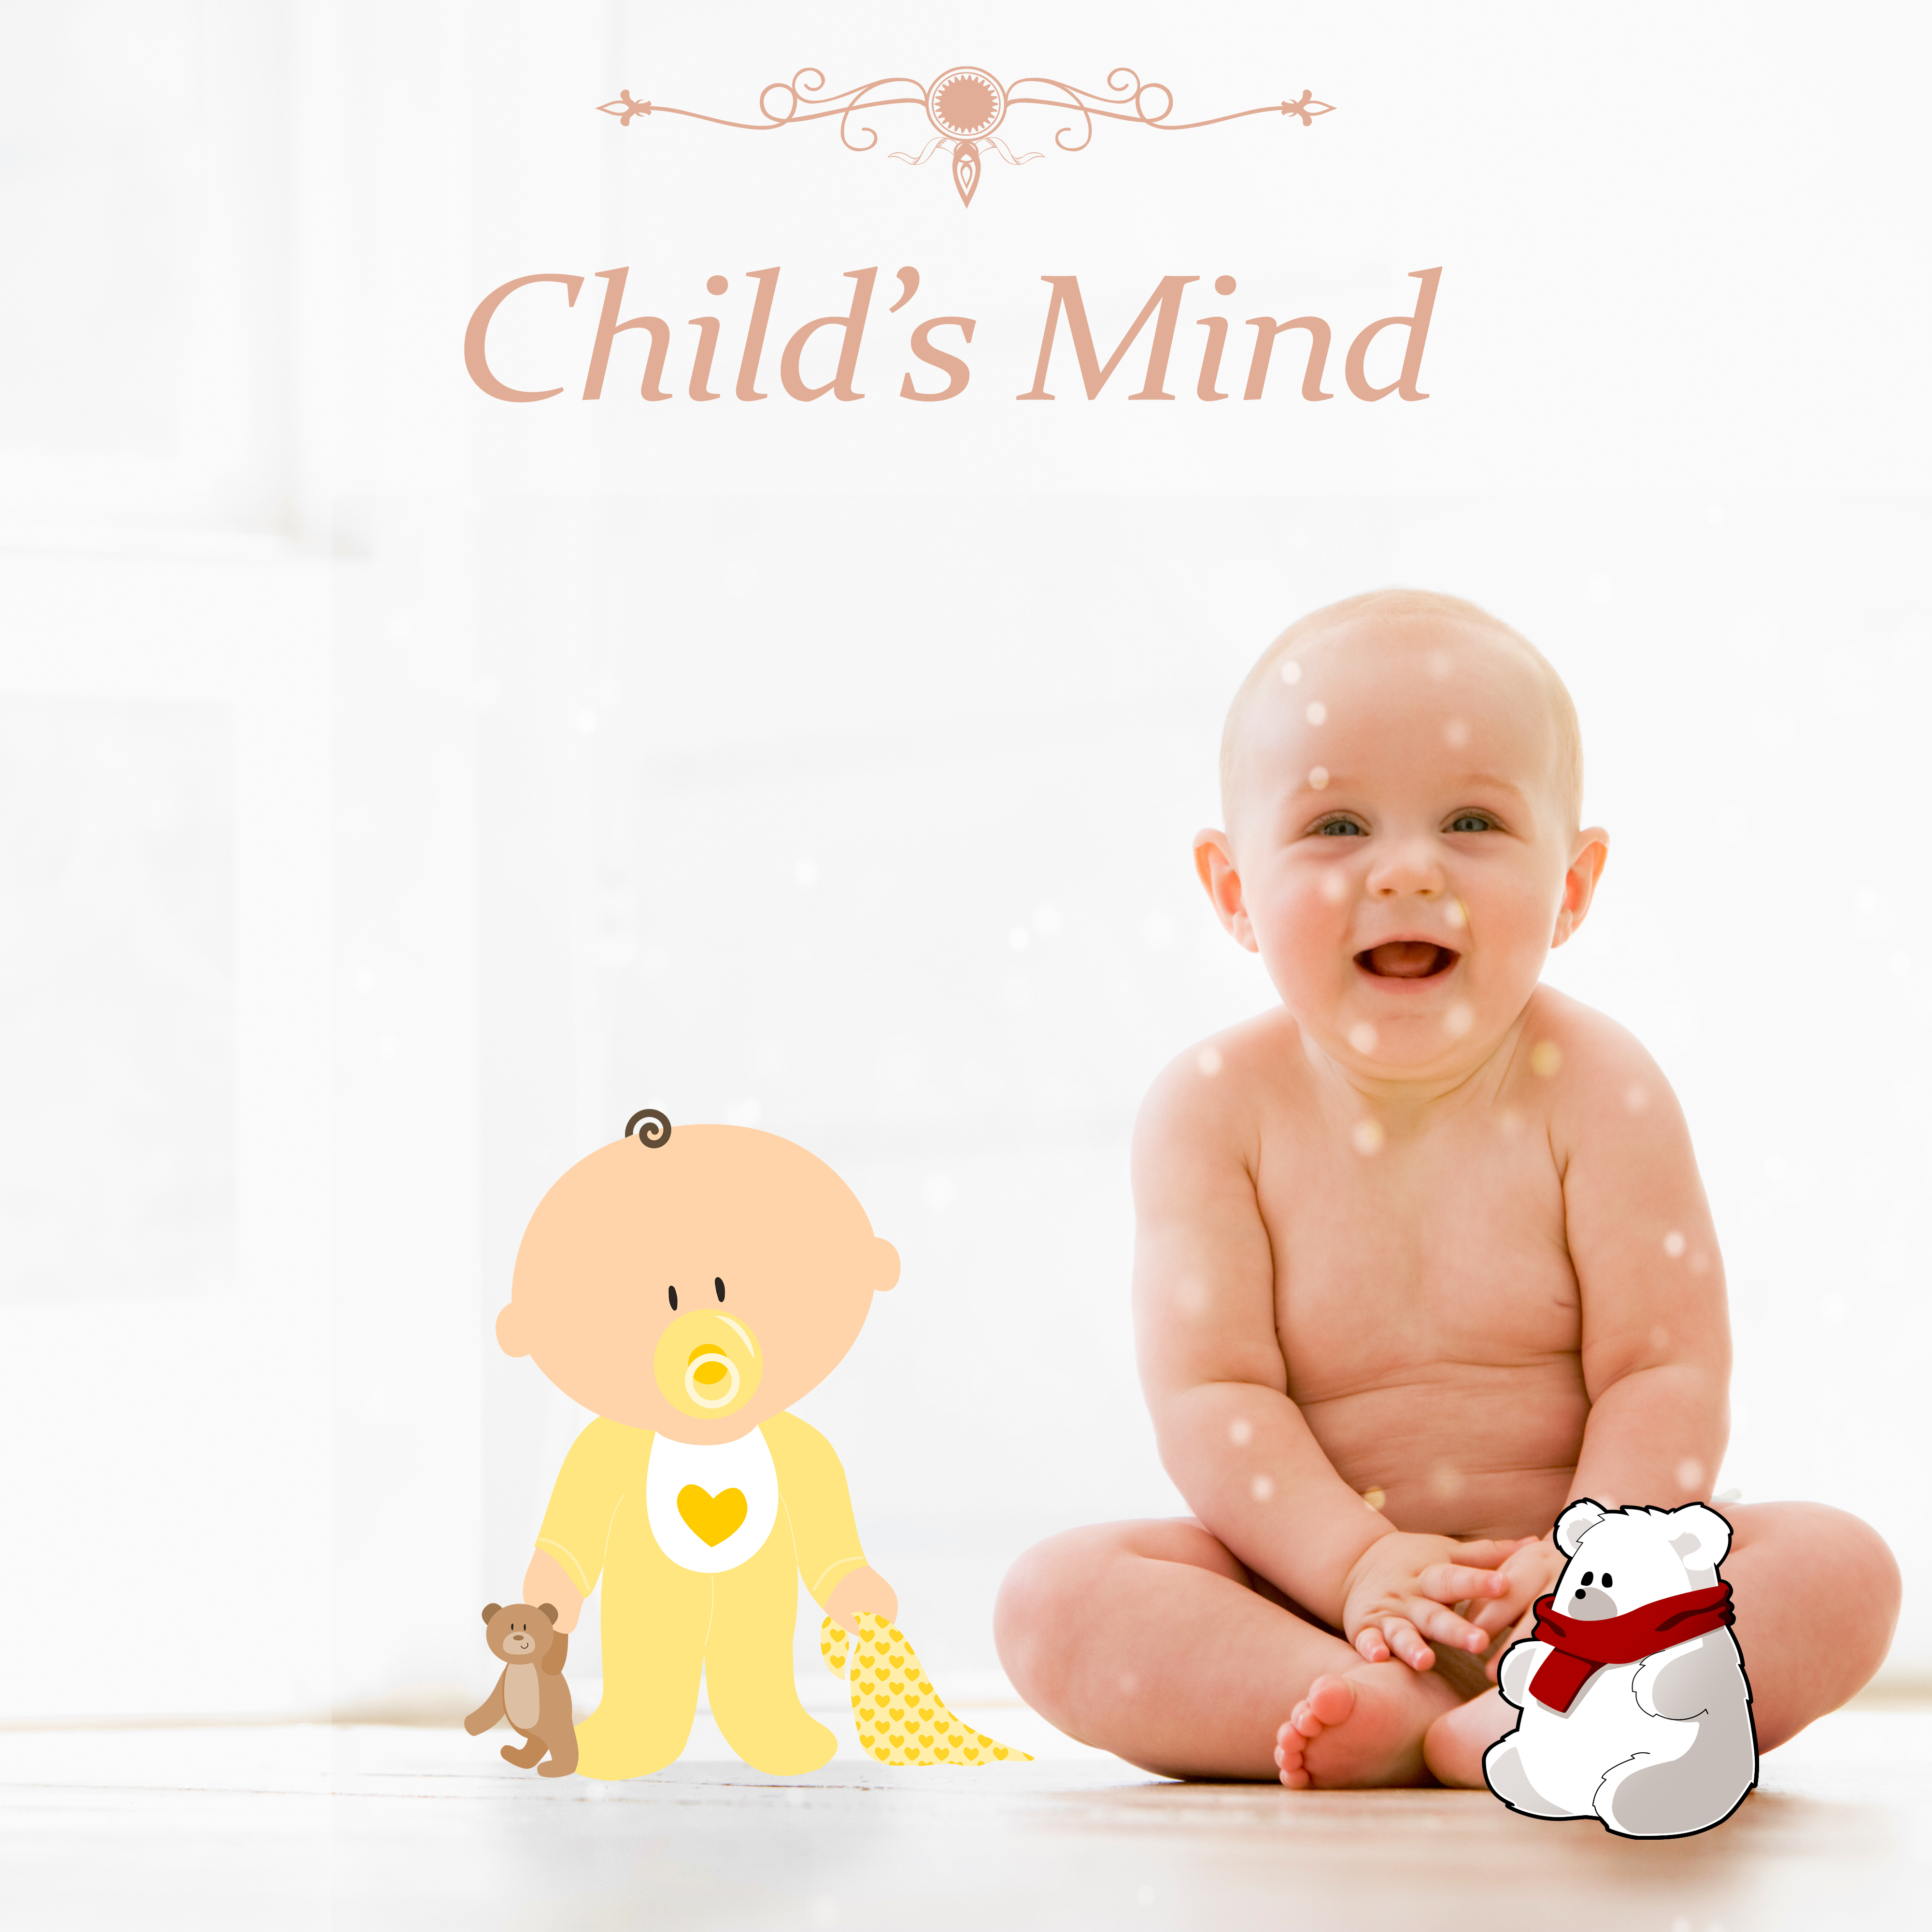 Child' s Mind  Music for Baby, Build Brain IQ, Development Sounds, Baby Progress